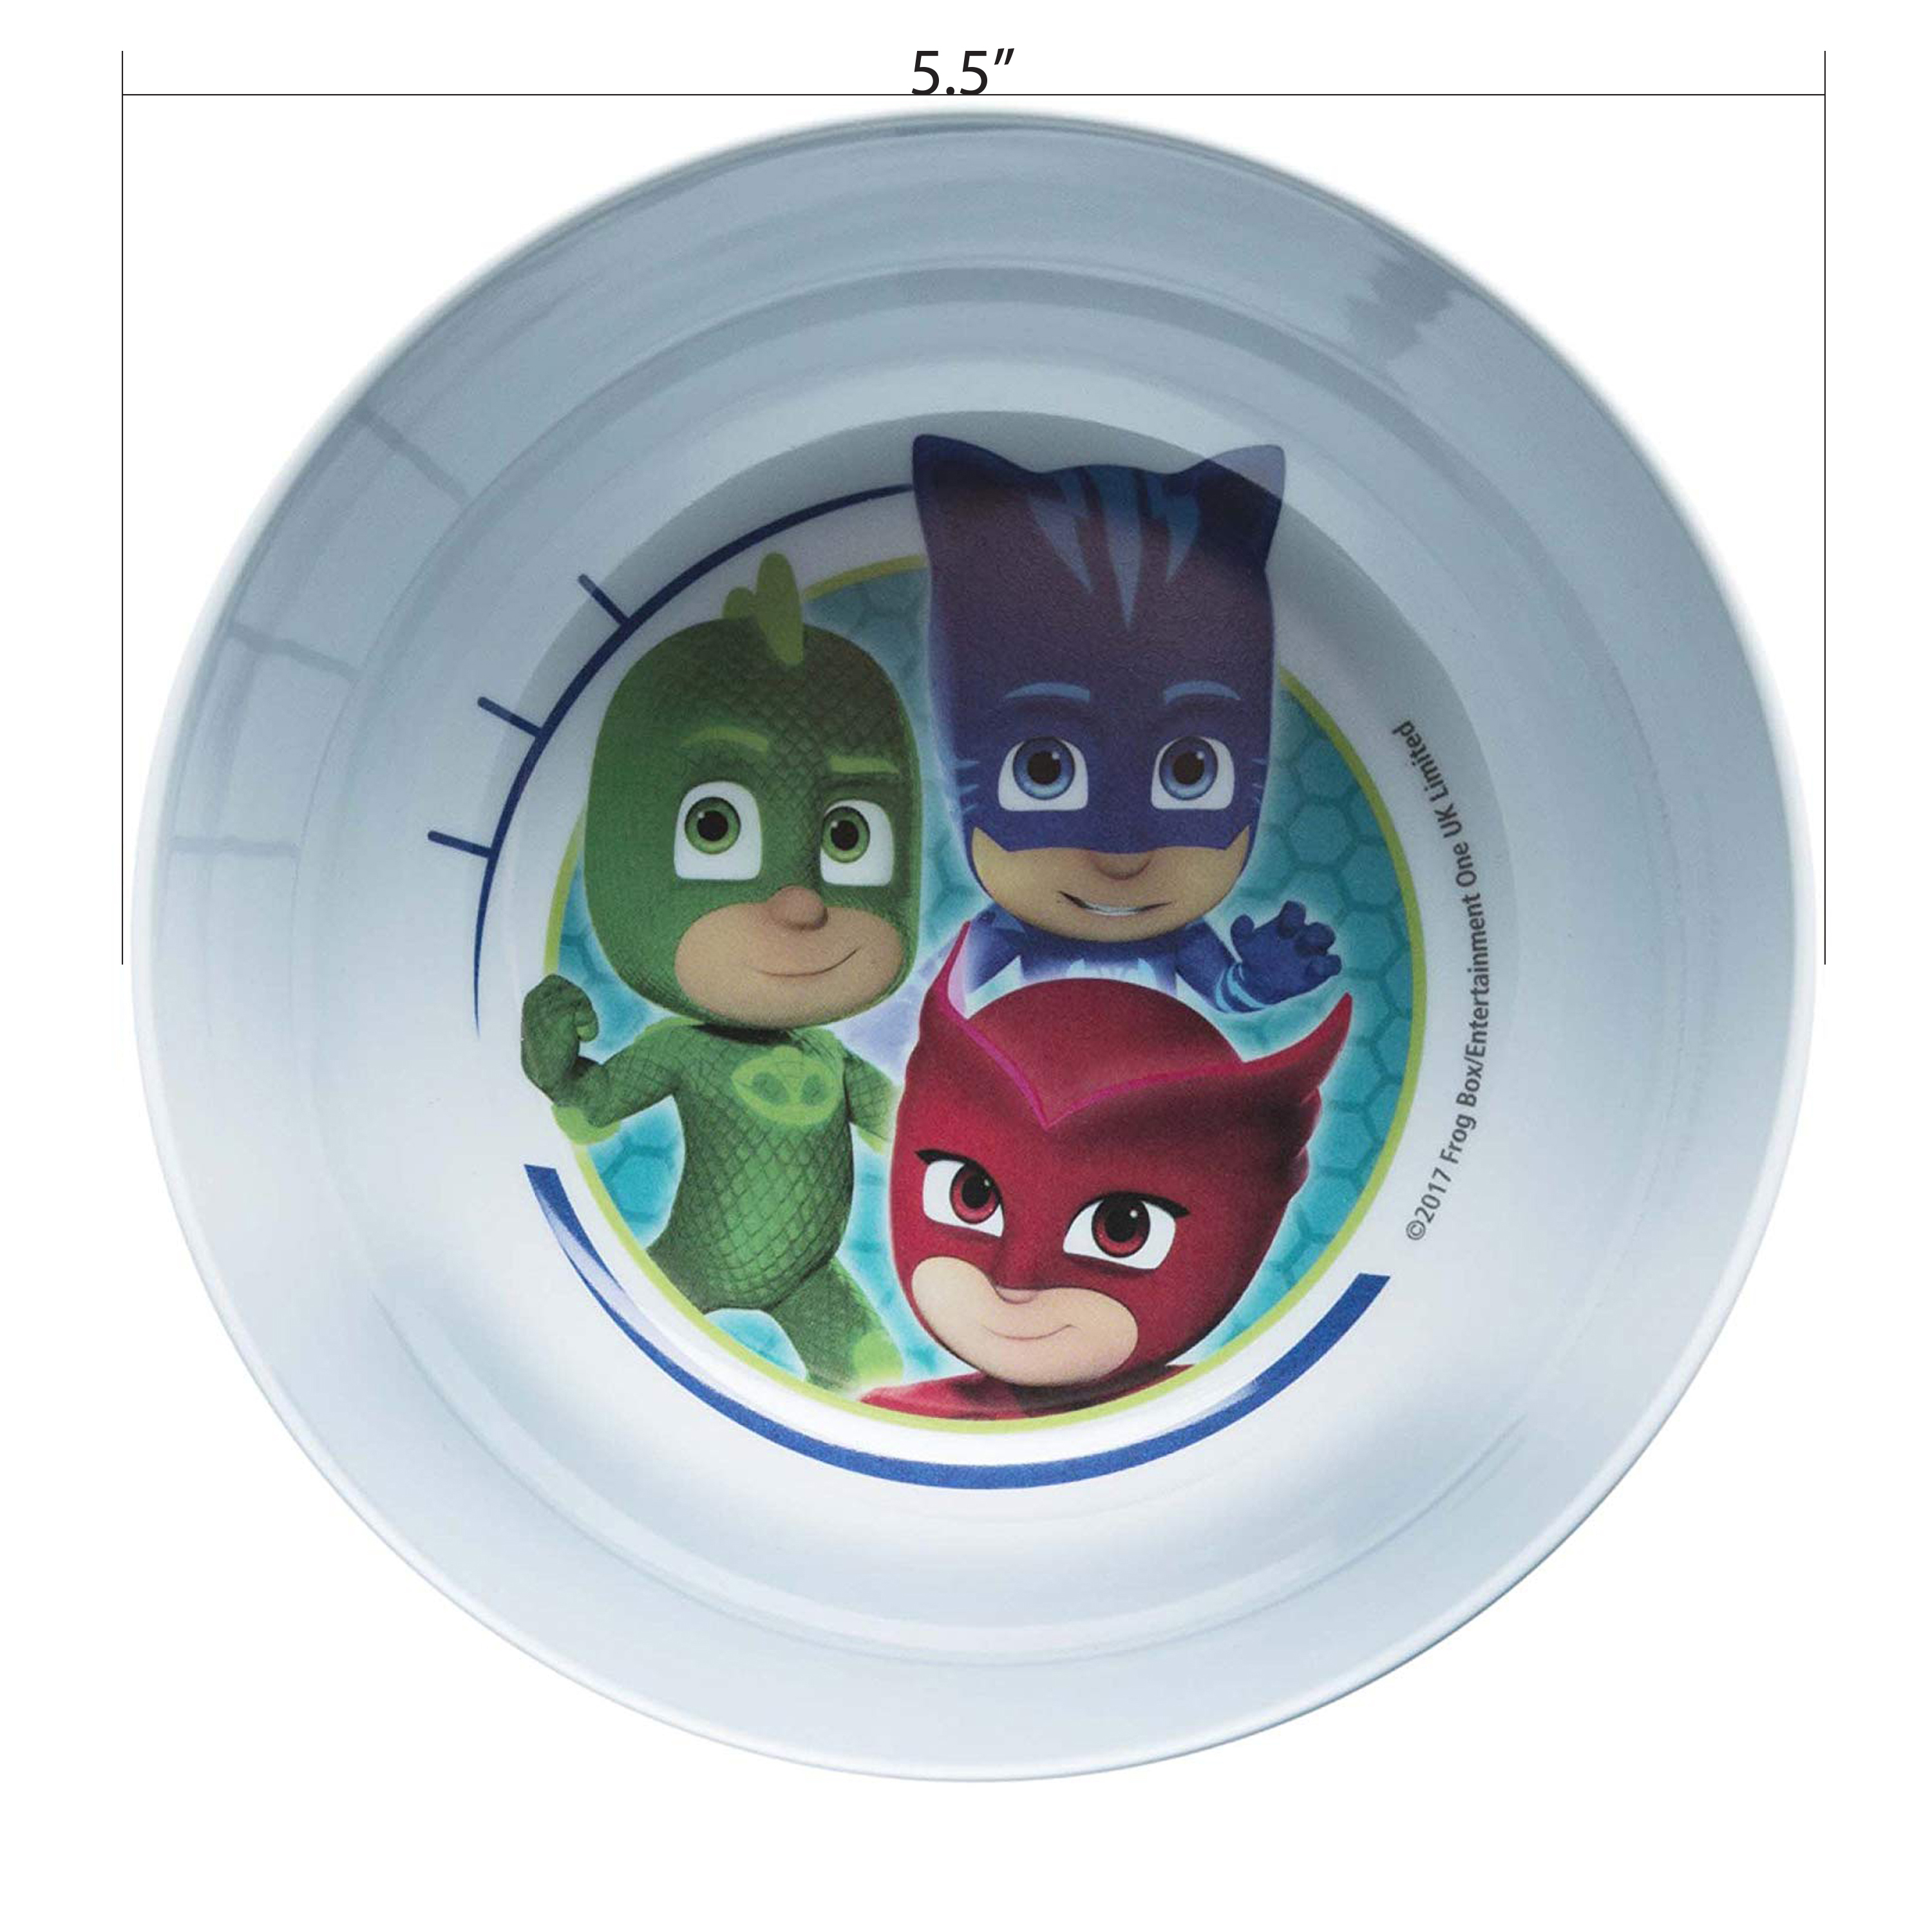 PJ Masks Dinnerware Set, Catboy, Owlette and Gekko, 5-piece set slideshow image 3